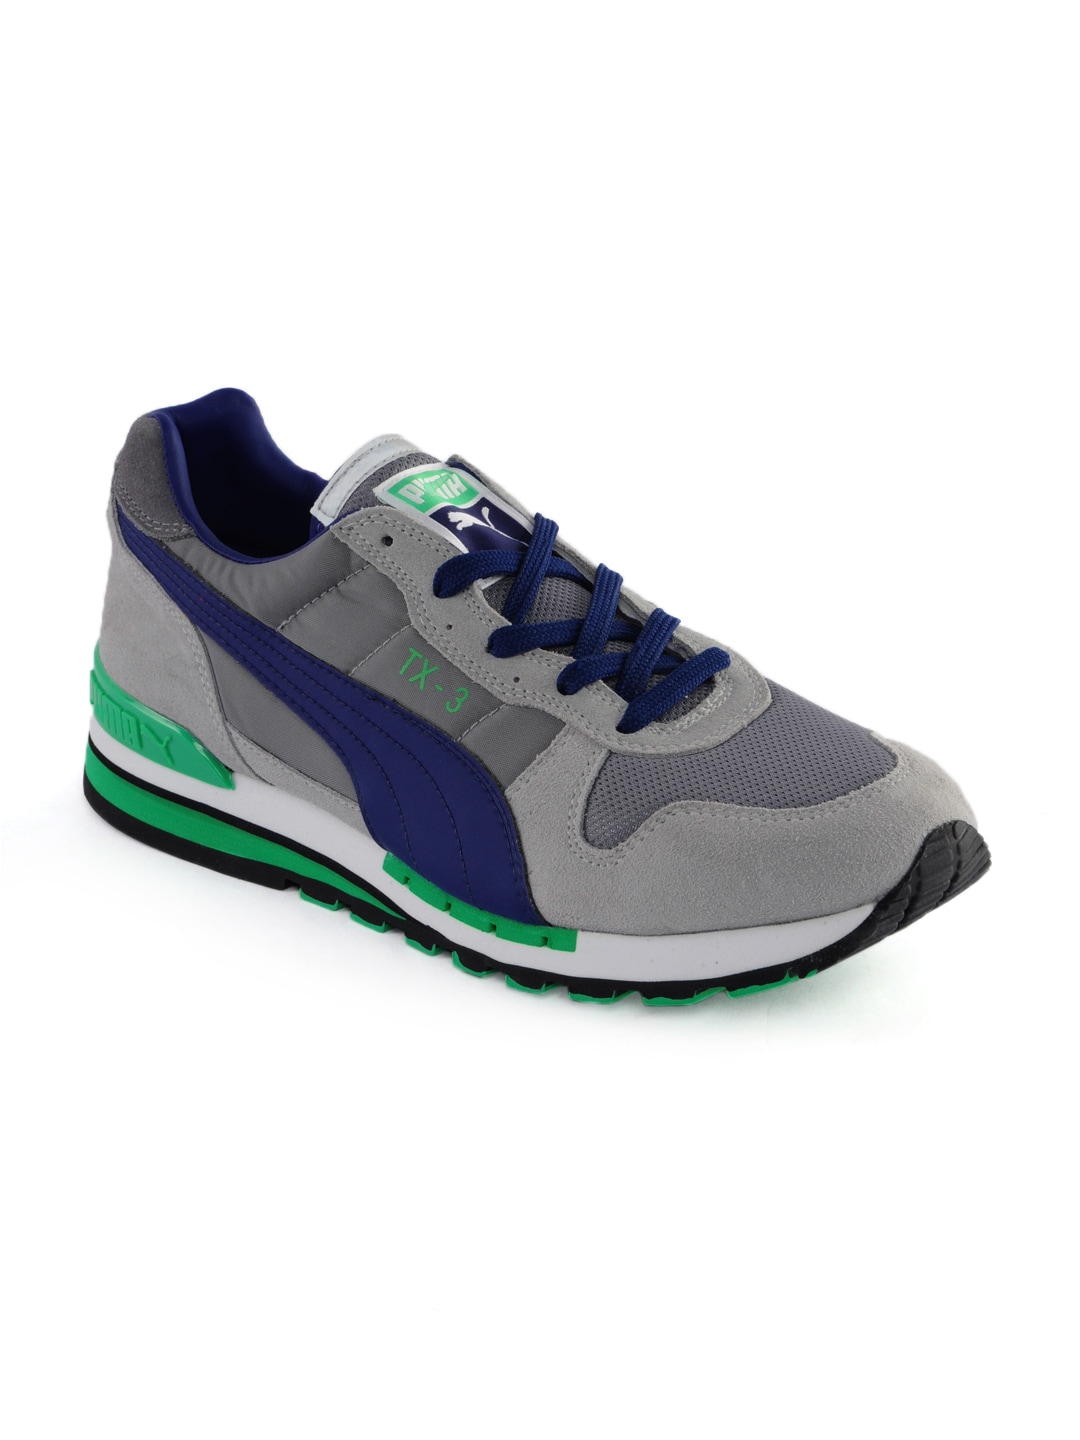 Puma Men TX-3 Grey & Blue Sports Shoes